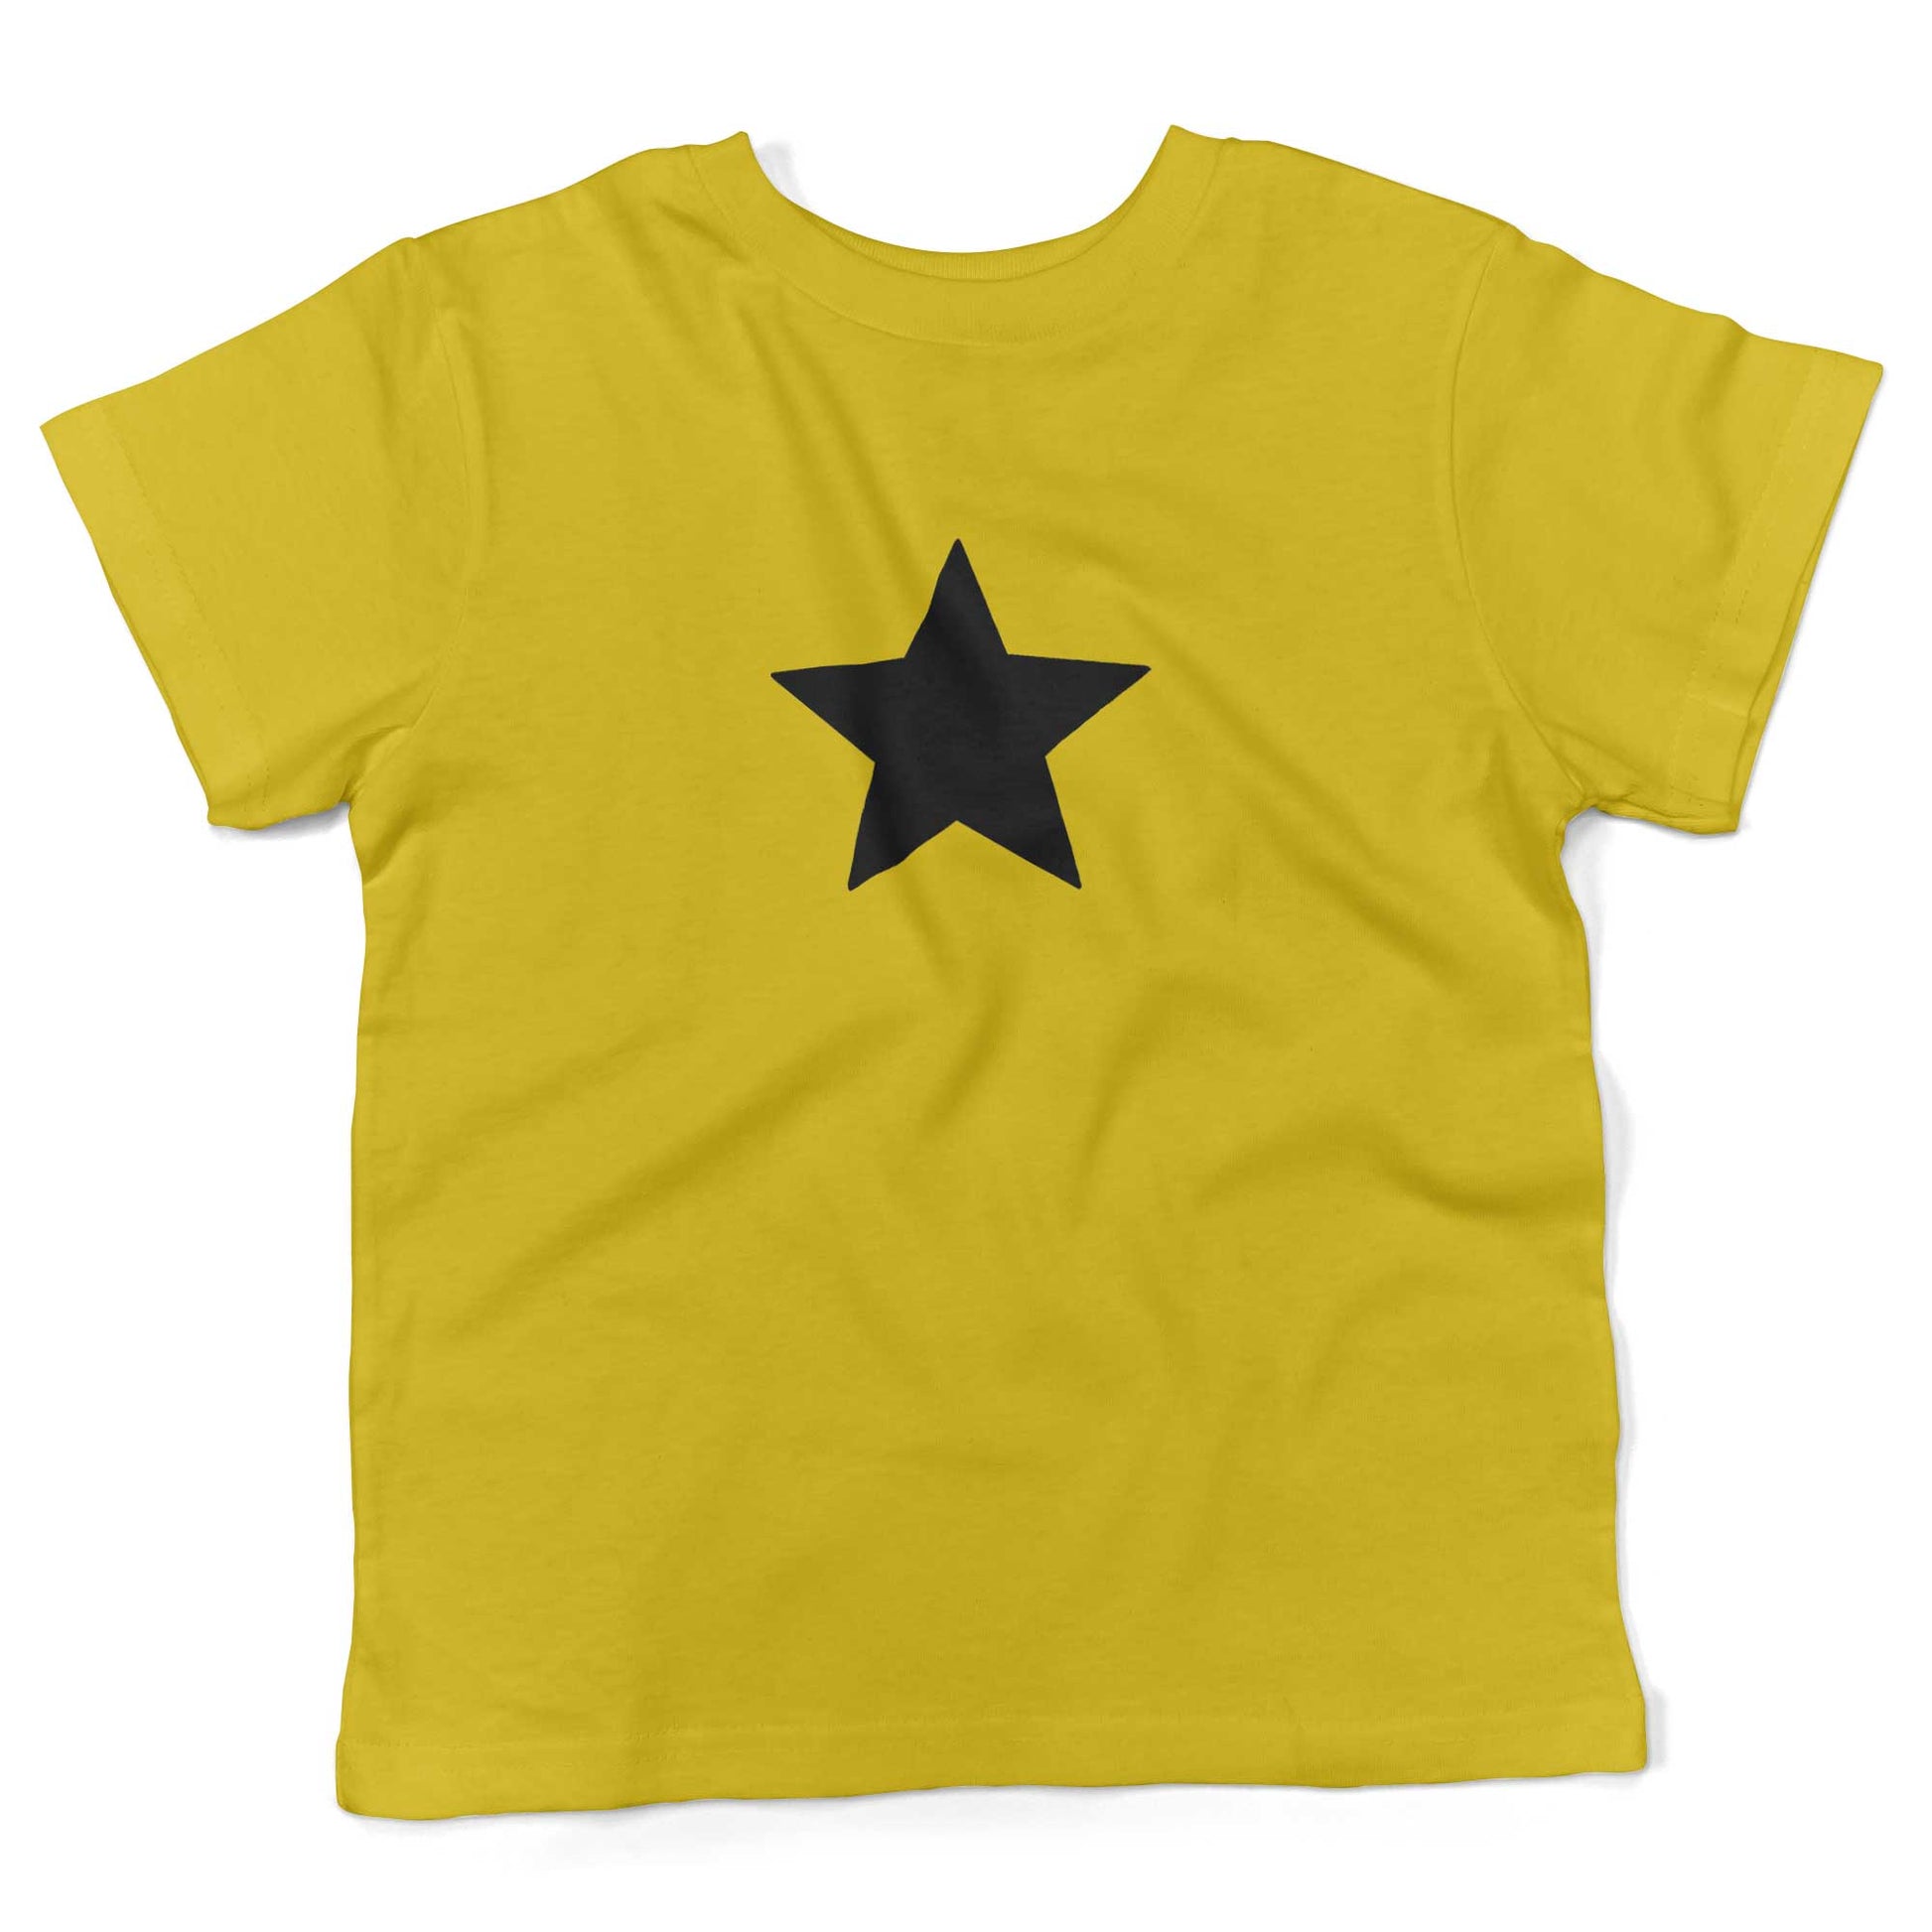 Five-Point Star Toddler Shirt-Sunshine Yellow-Black Star